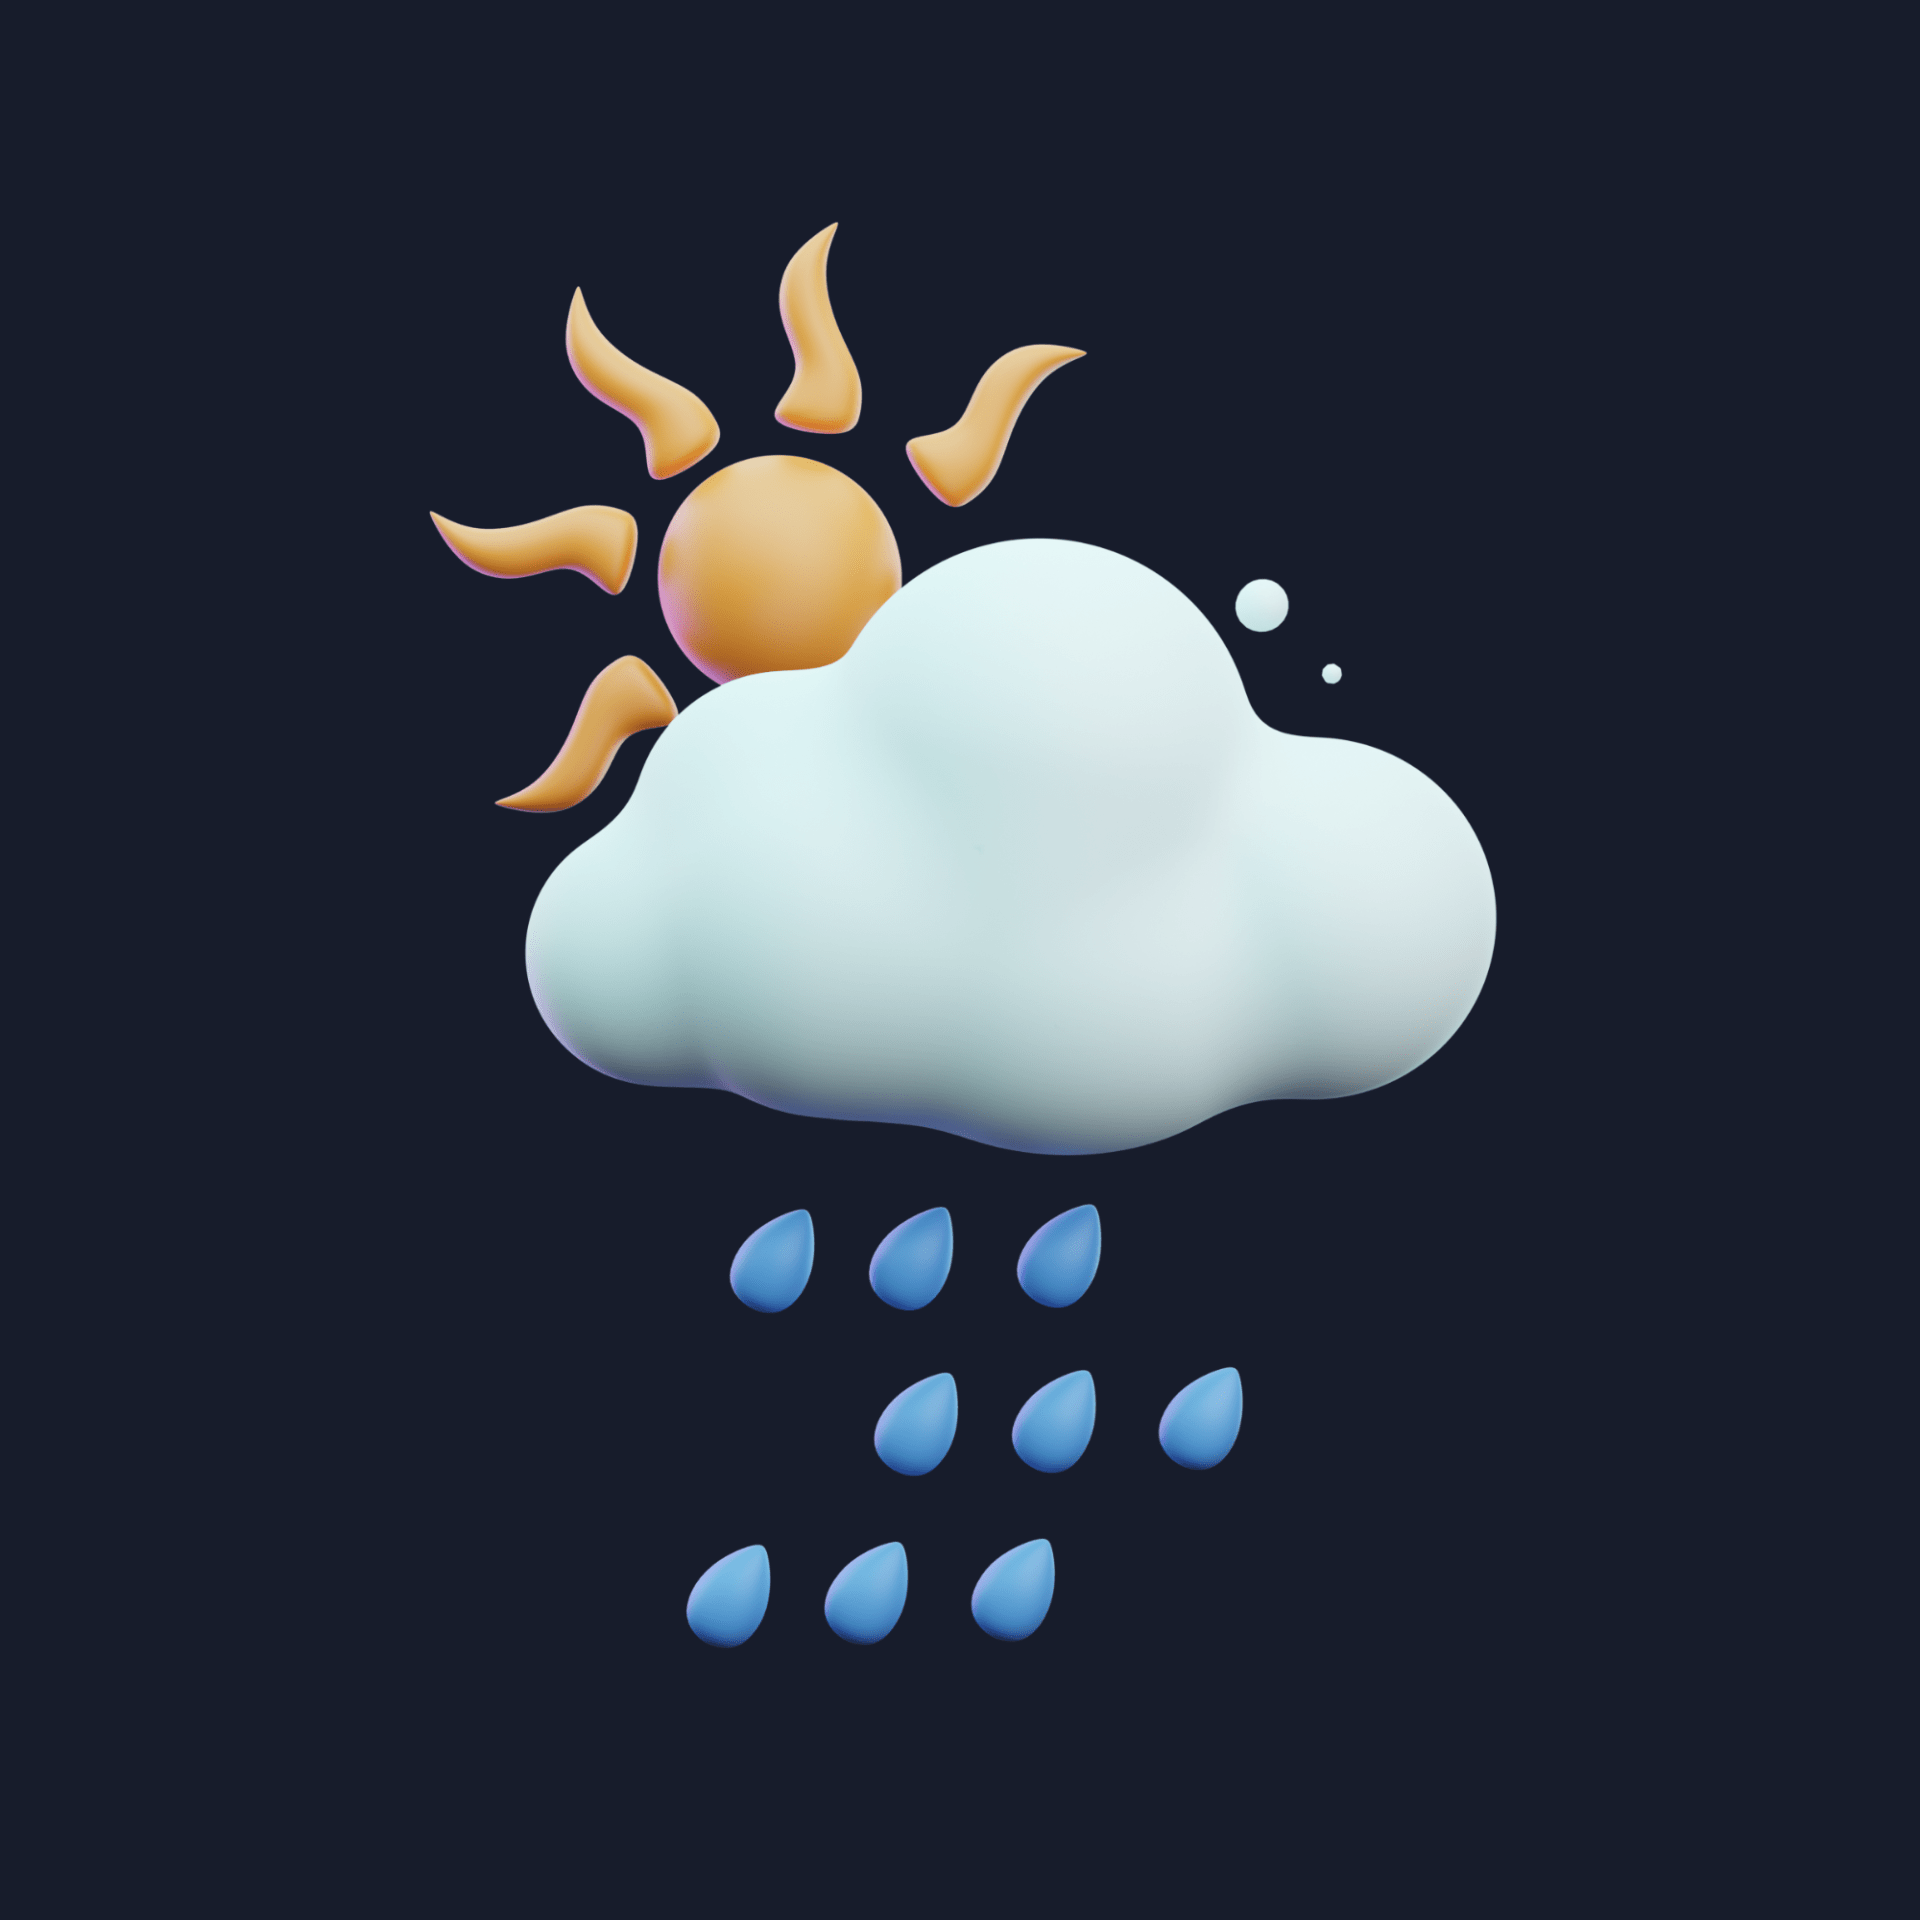 sun-cloud-with-raindrop-3d-illustration